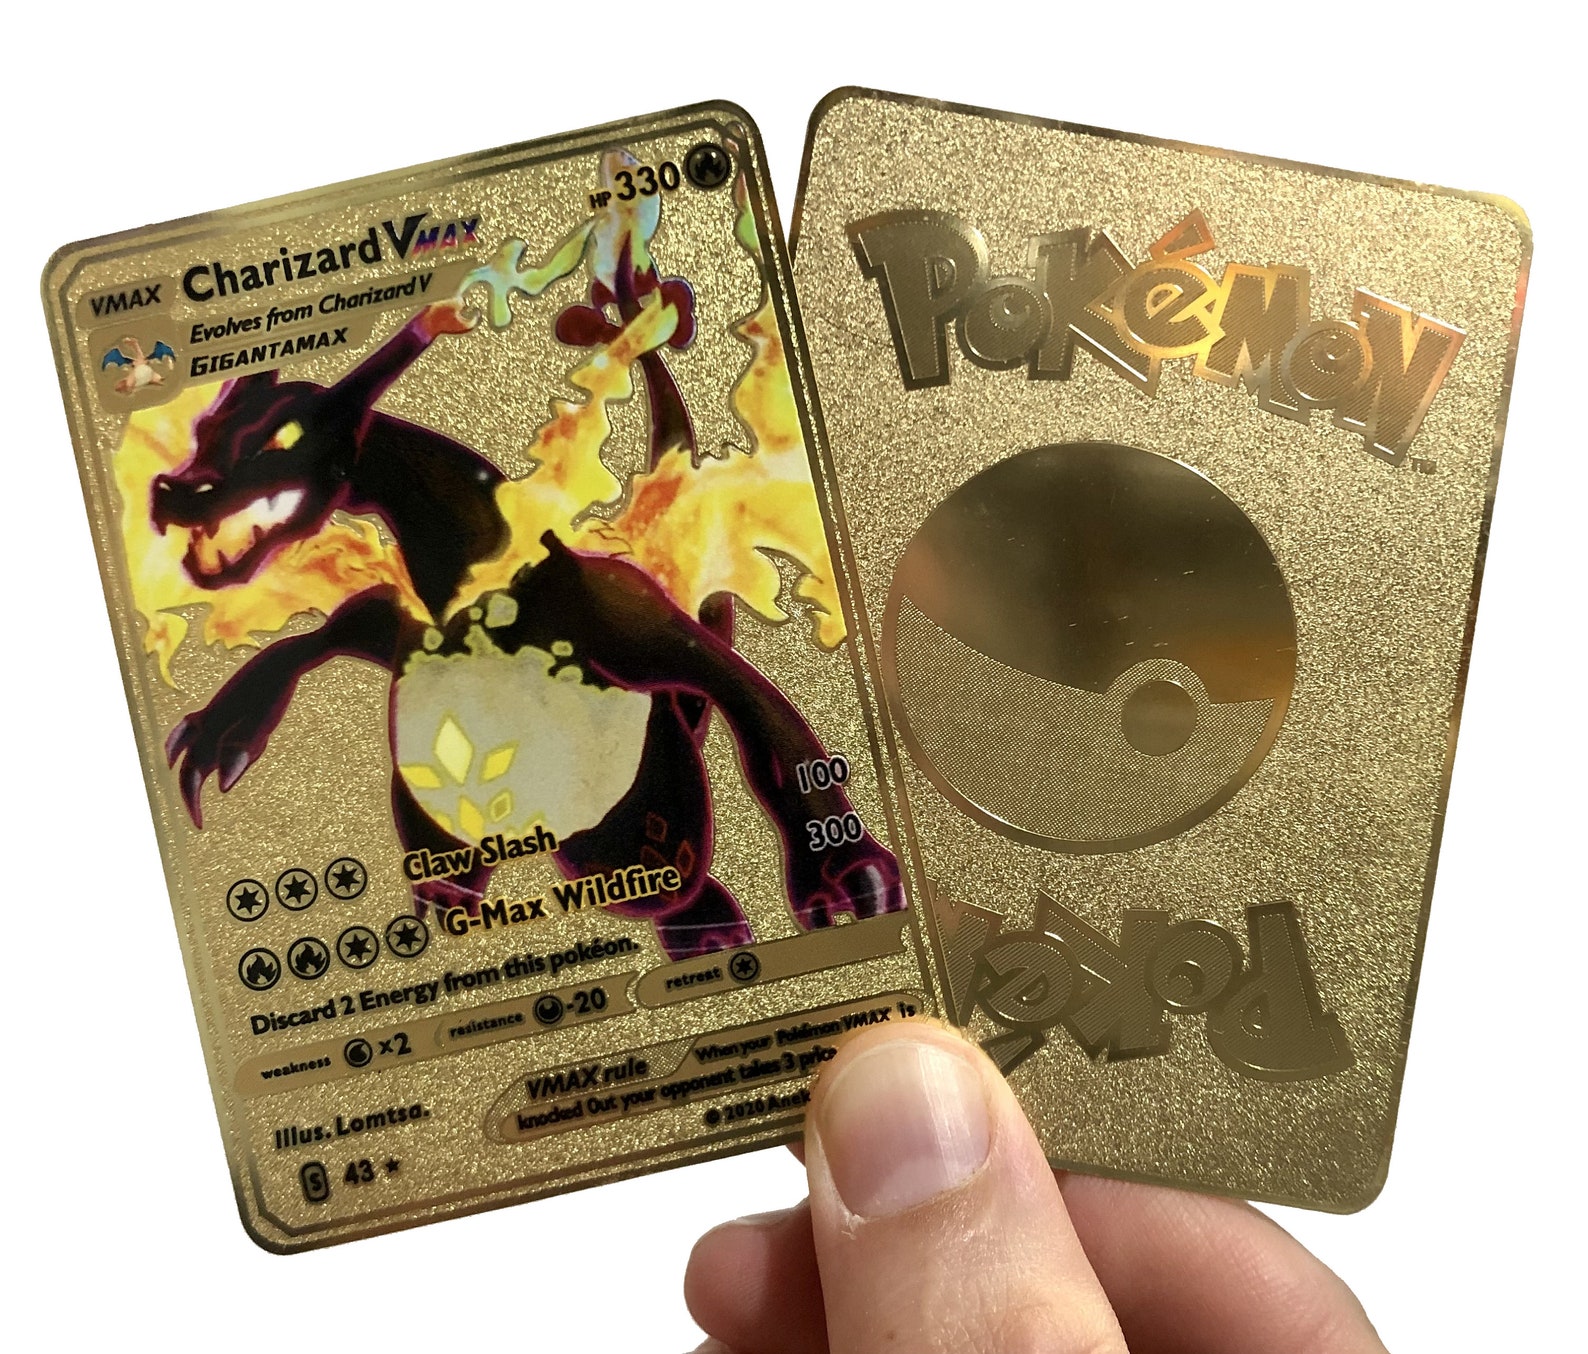 Charizard Vmax Gold Metal Pokemon Card